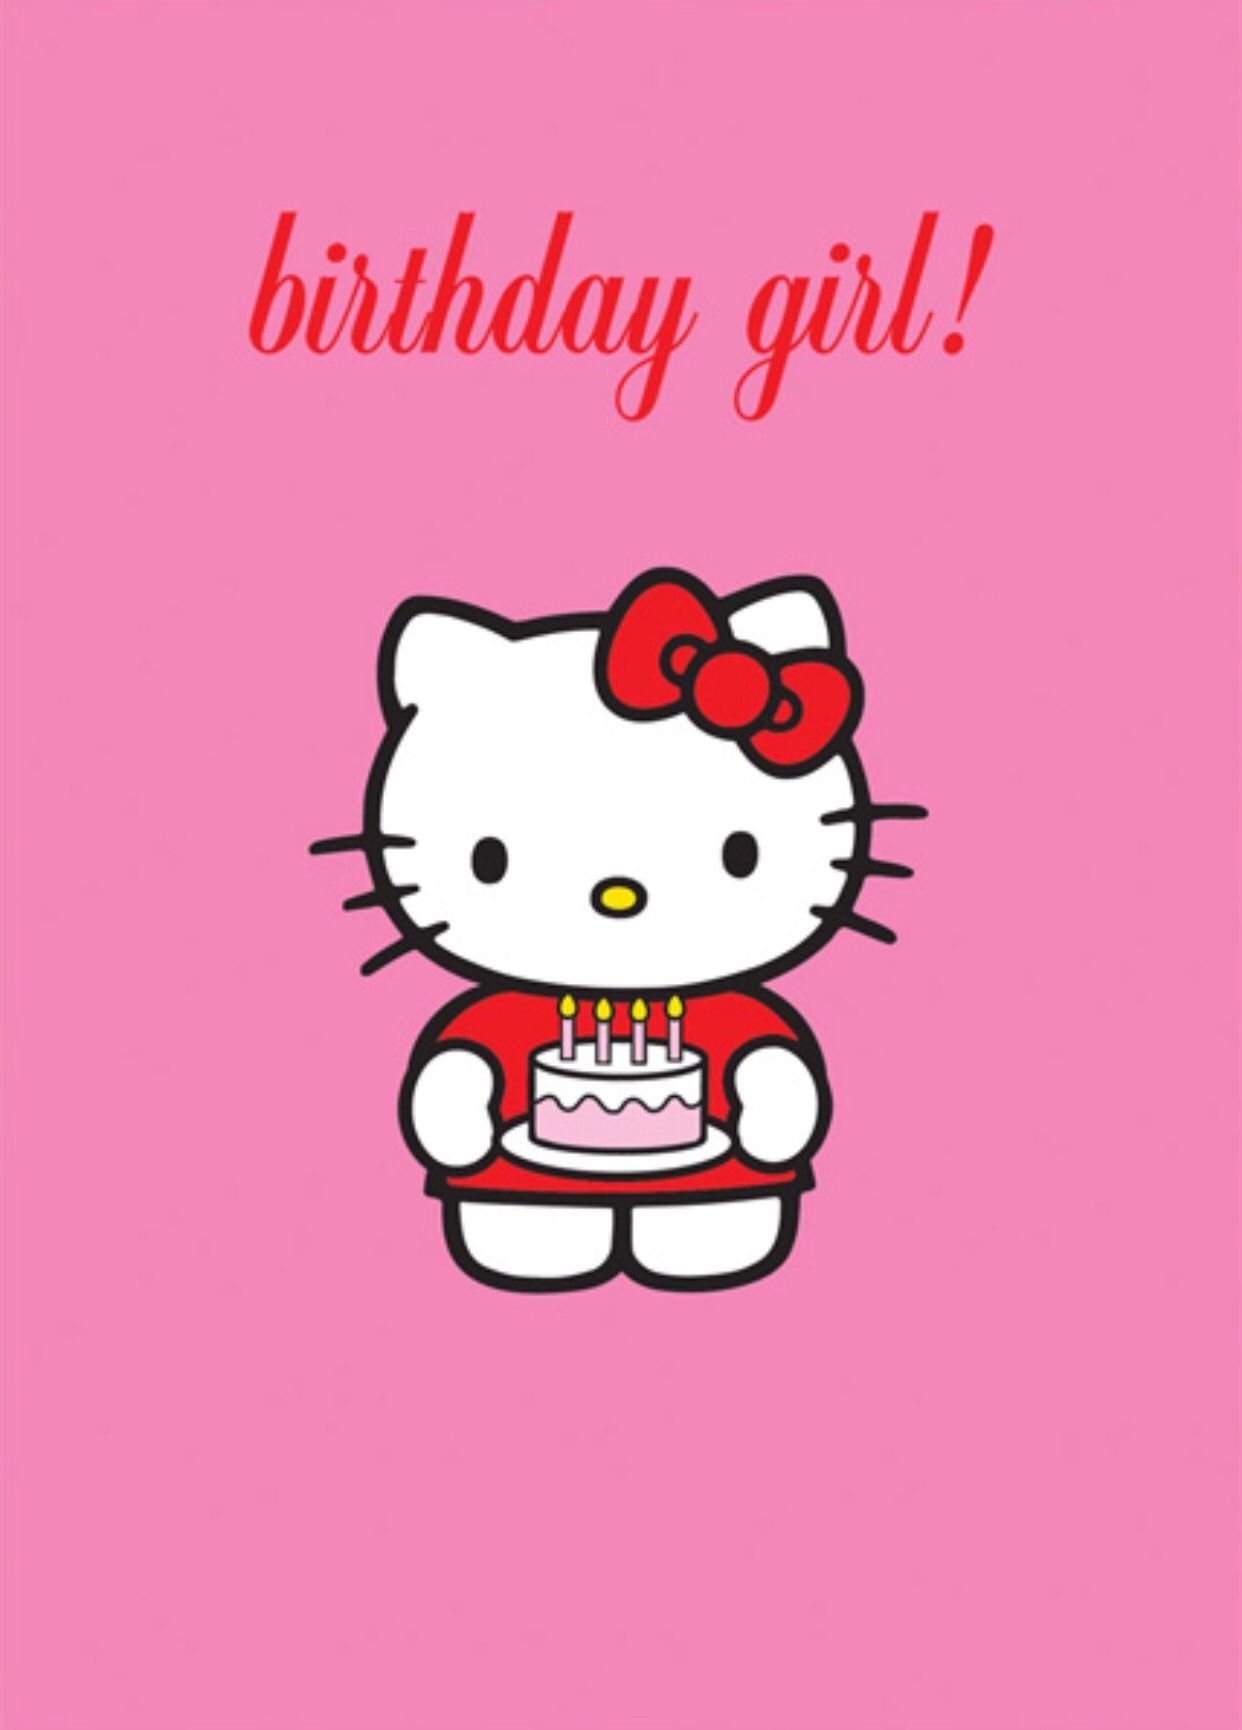 Открытка хеллоу. Хэллоу Китти с др. Hello Kitty открытка с днем рождения. Открытка на др с Хеллоу Китти. Открытка с Хеллоу Китти на день рождение.